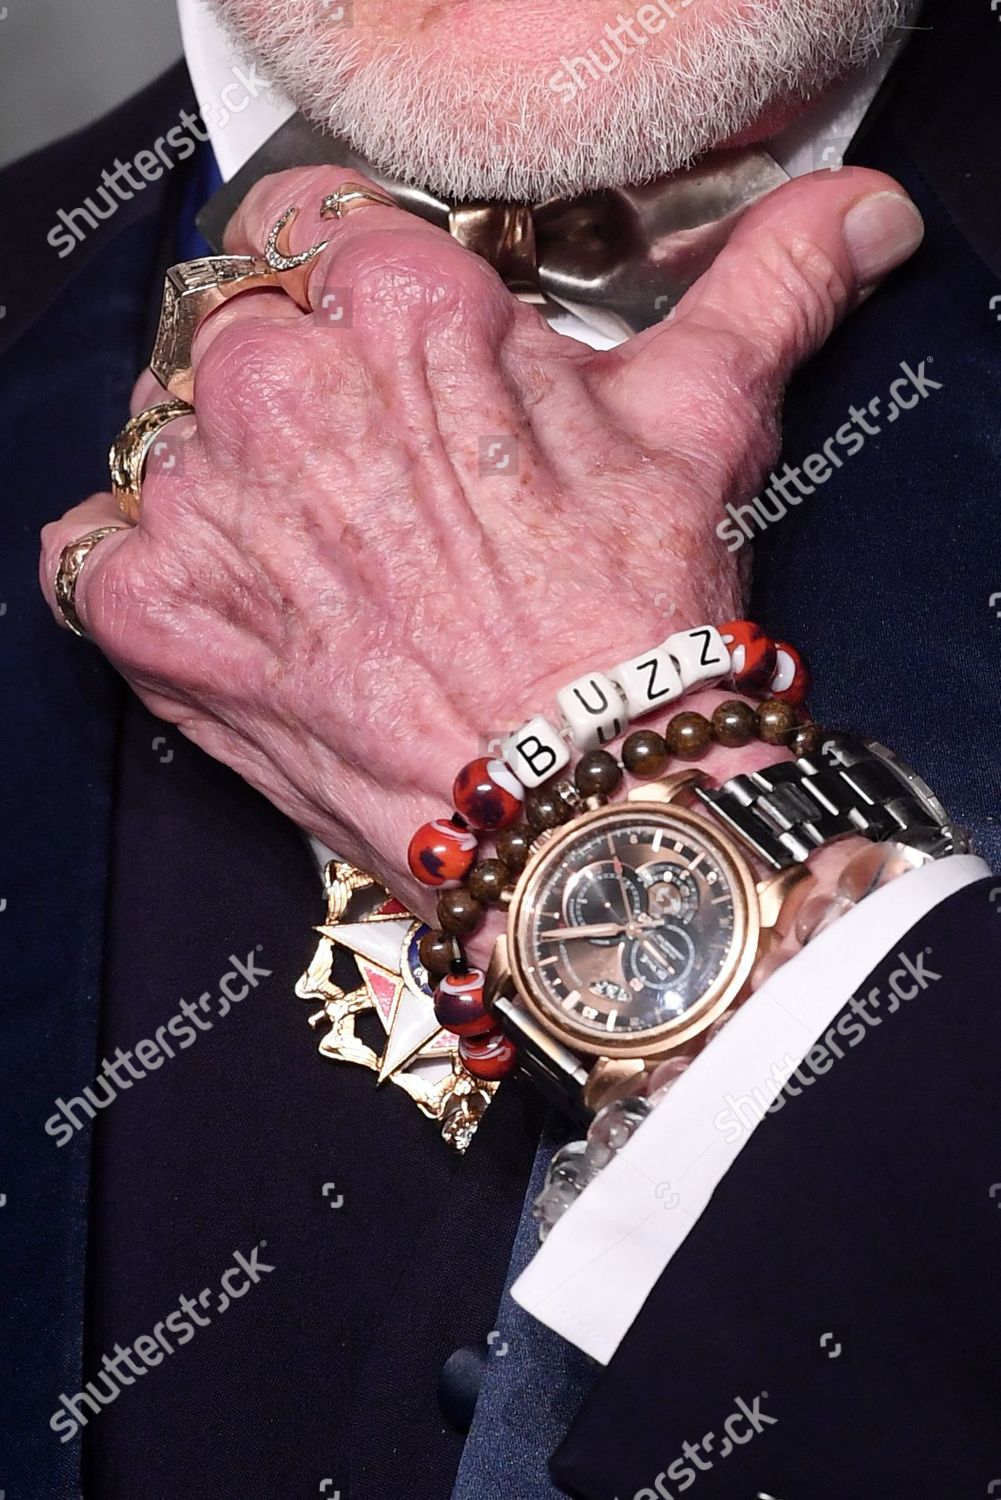 buzz aldrin's watch